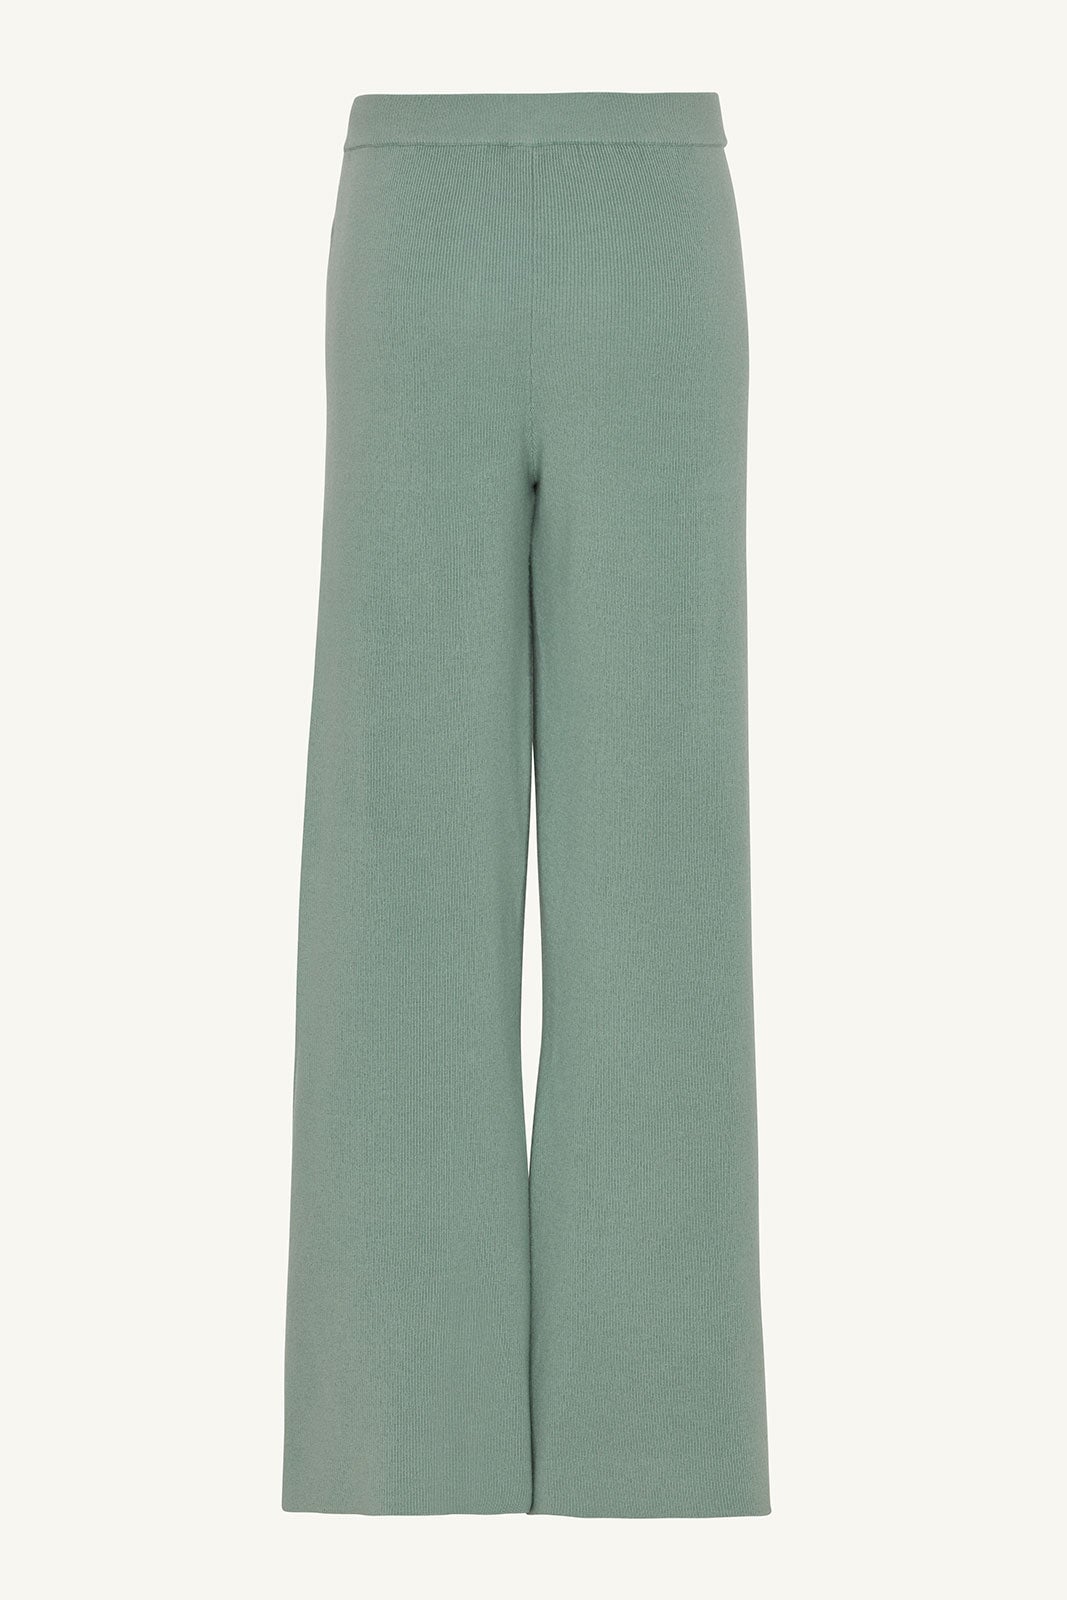 Green Ribbed Knit Pants - Wide-Leg Lounge Pants - Sweater Pants